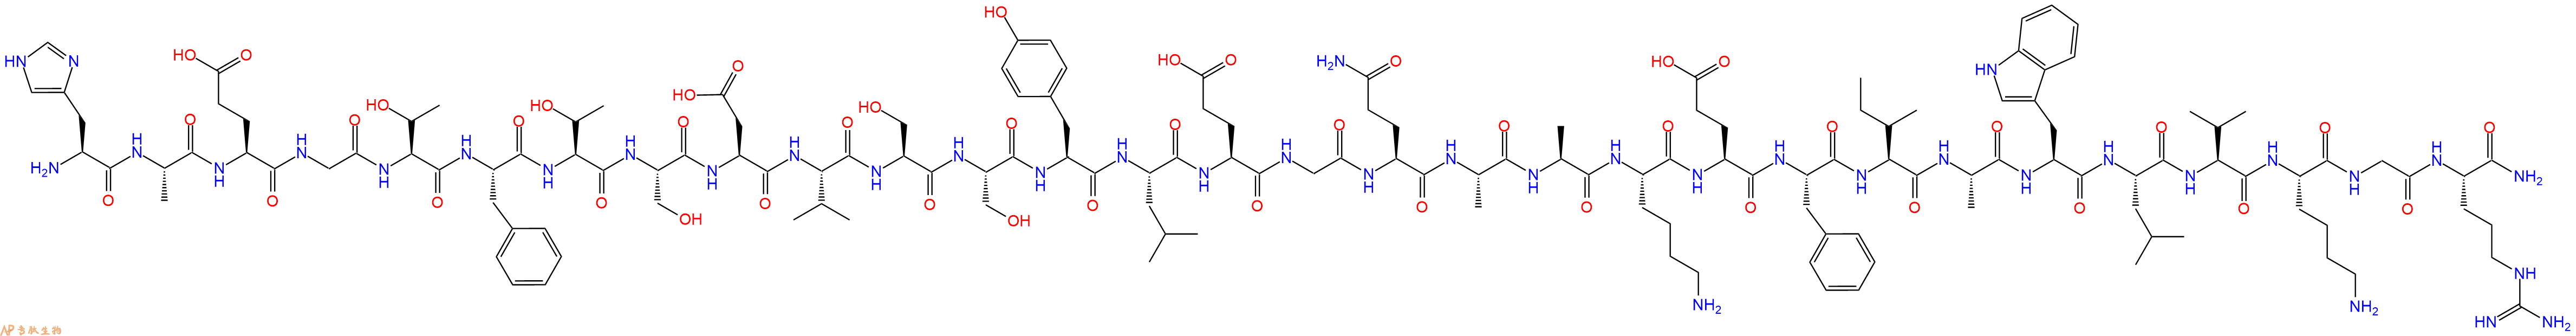 专肽生物产品胰高血糖素样肽1(7-36)酰胺(人)、Glucagon-Like Peptide I(7-36), amide, human107444-51-9/89750-14-1